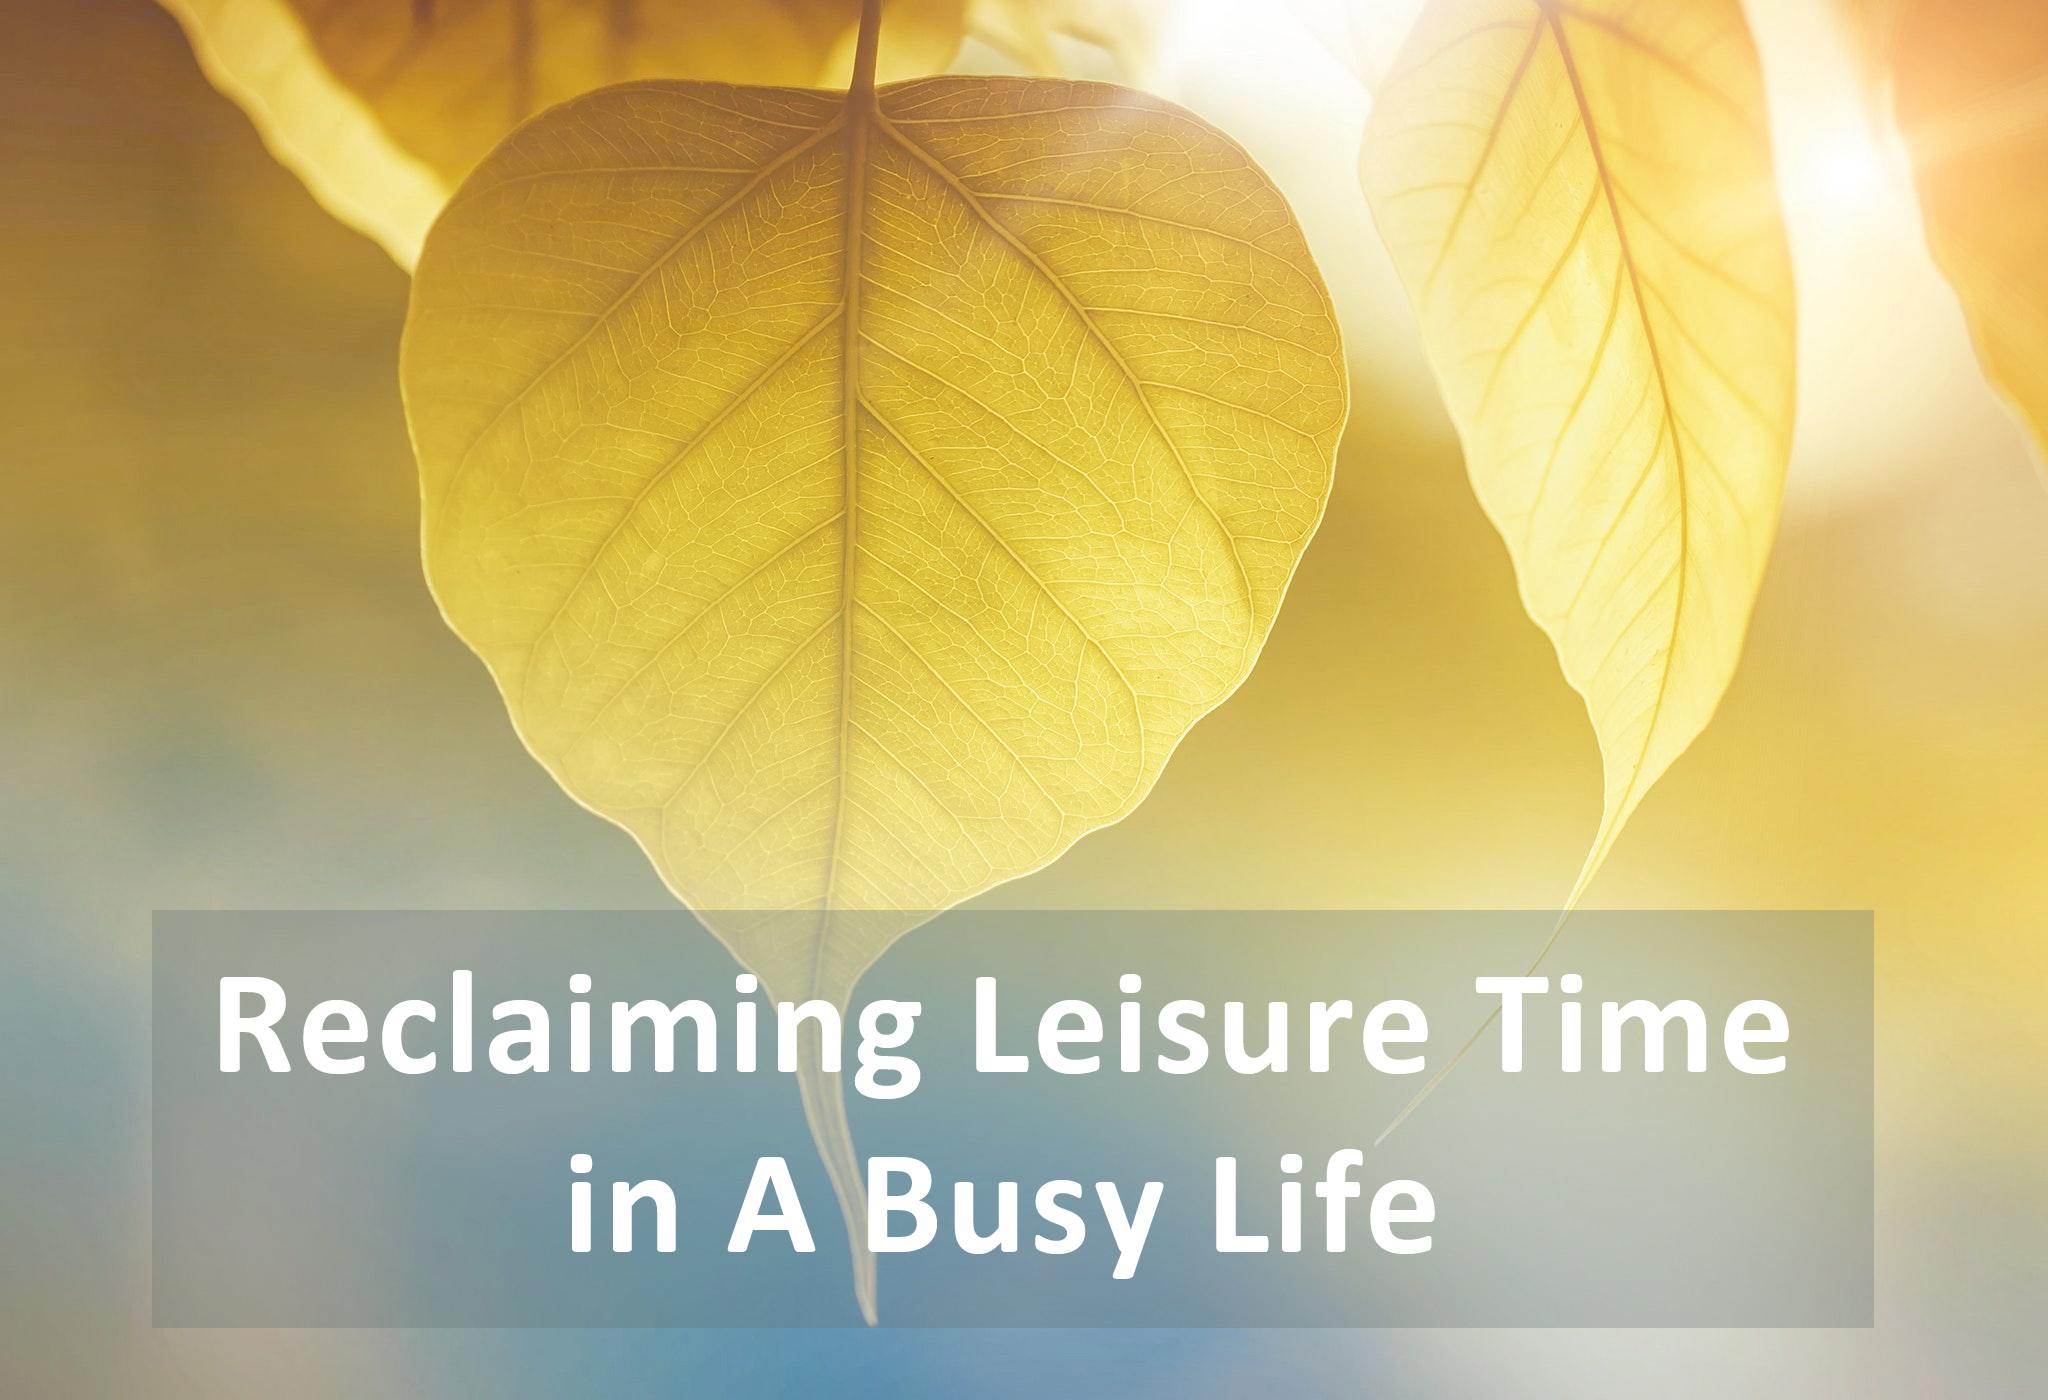 Practices to Reclaim Leisure